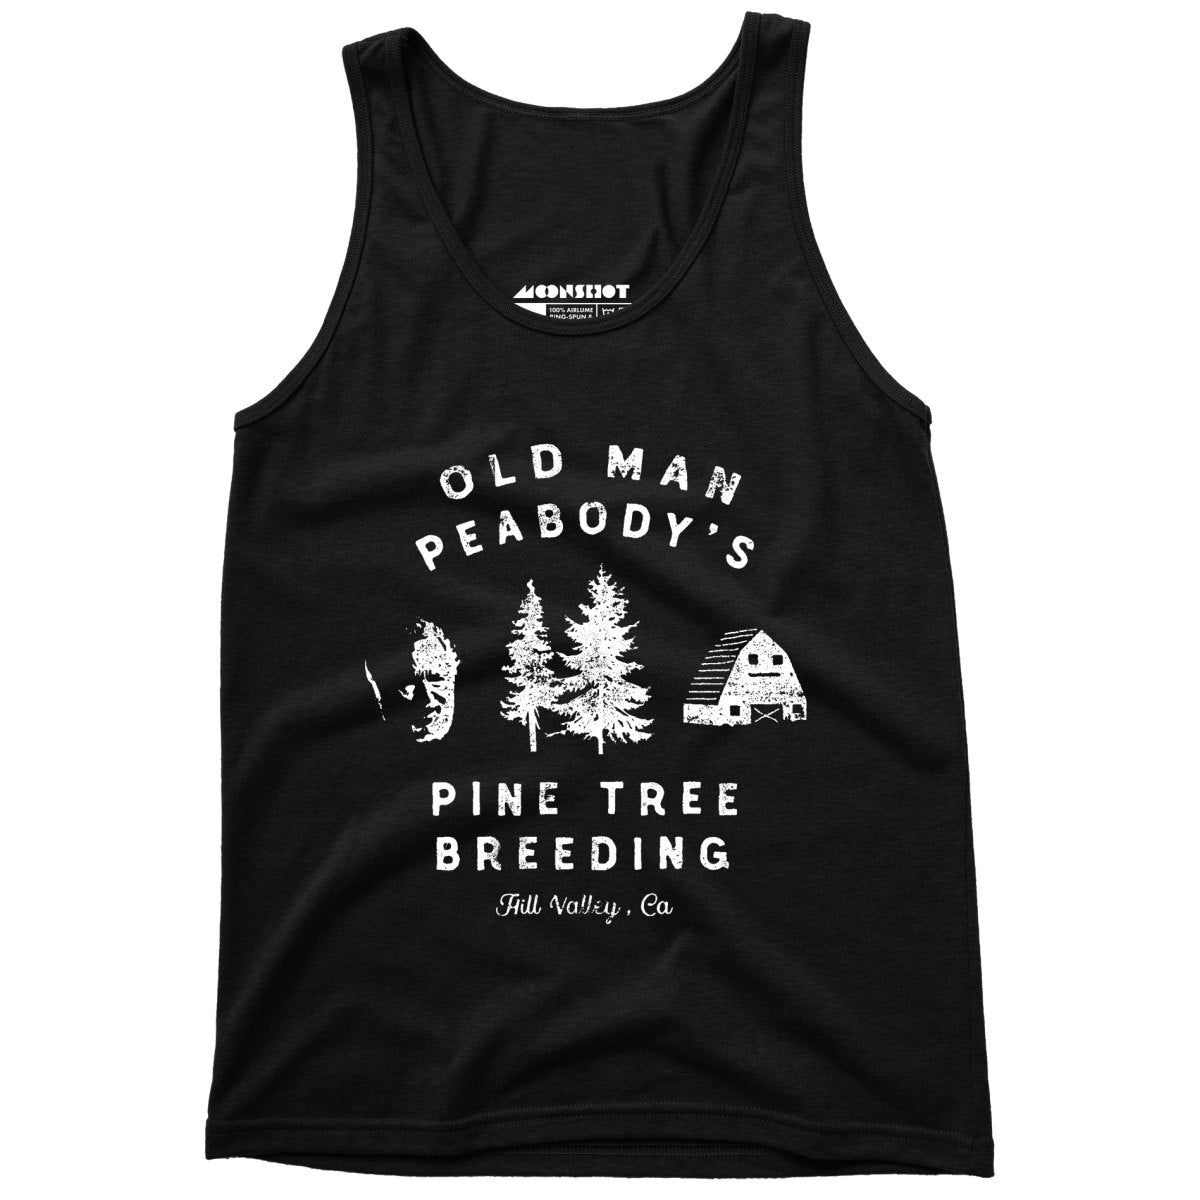 Old Man Peabody's Pine Tree Breeding - Unisex Tank Top